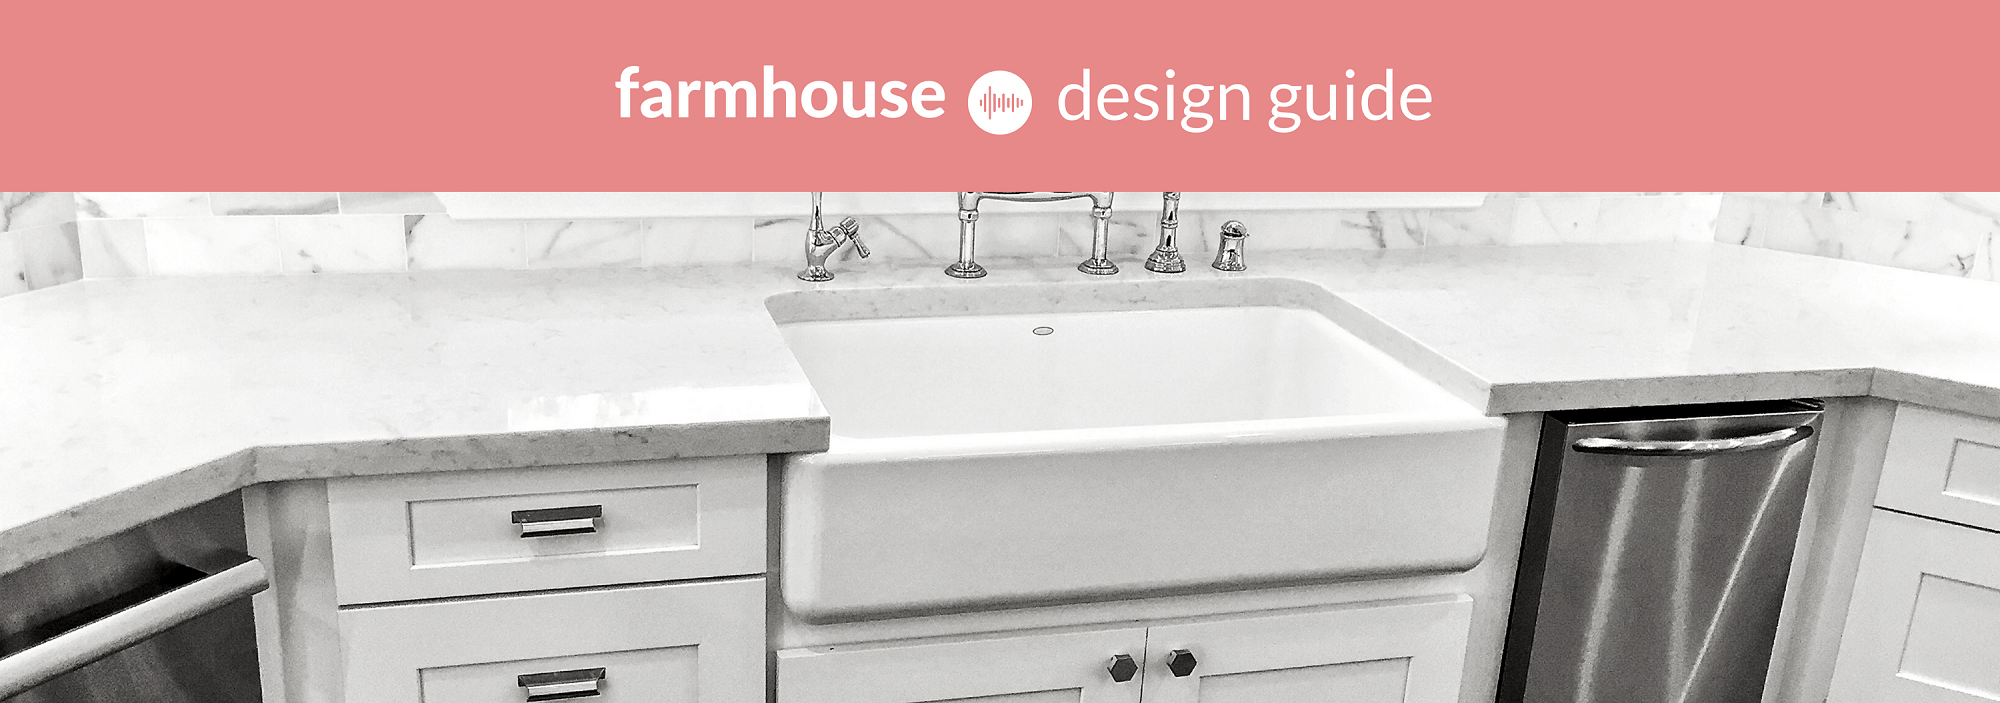 DIY Farmhouse Kitchen Decor Ideas -31 Rustic Crafts